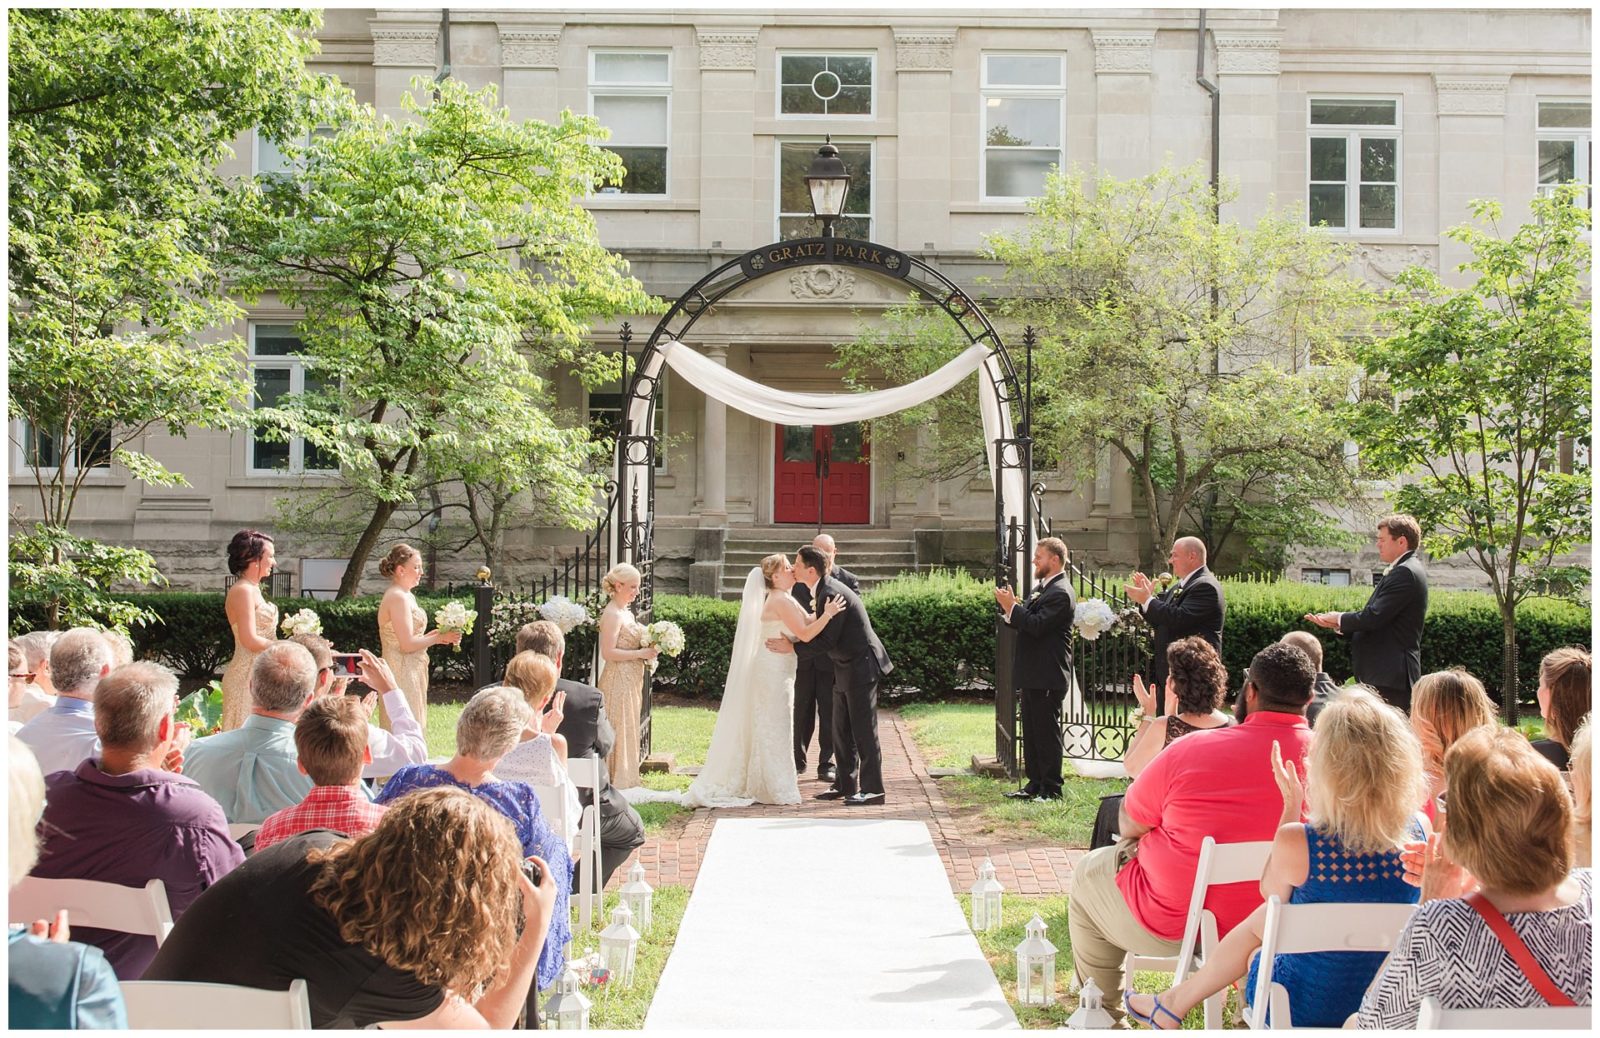 Wedding ceremony photos at Gratz Park in Lexington, Kentucky.